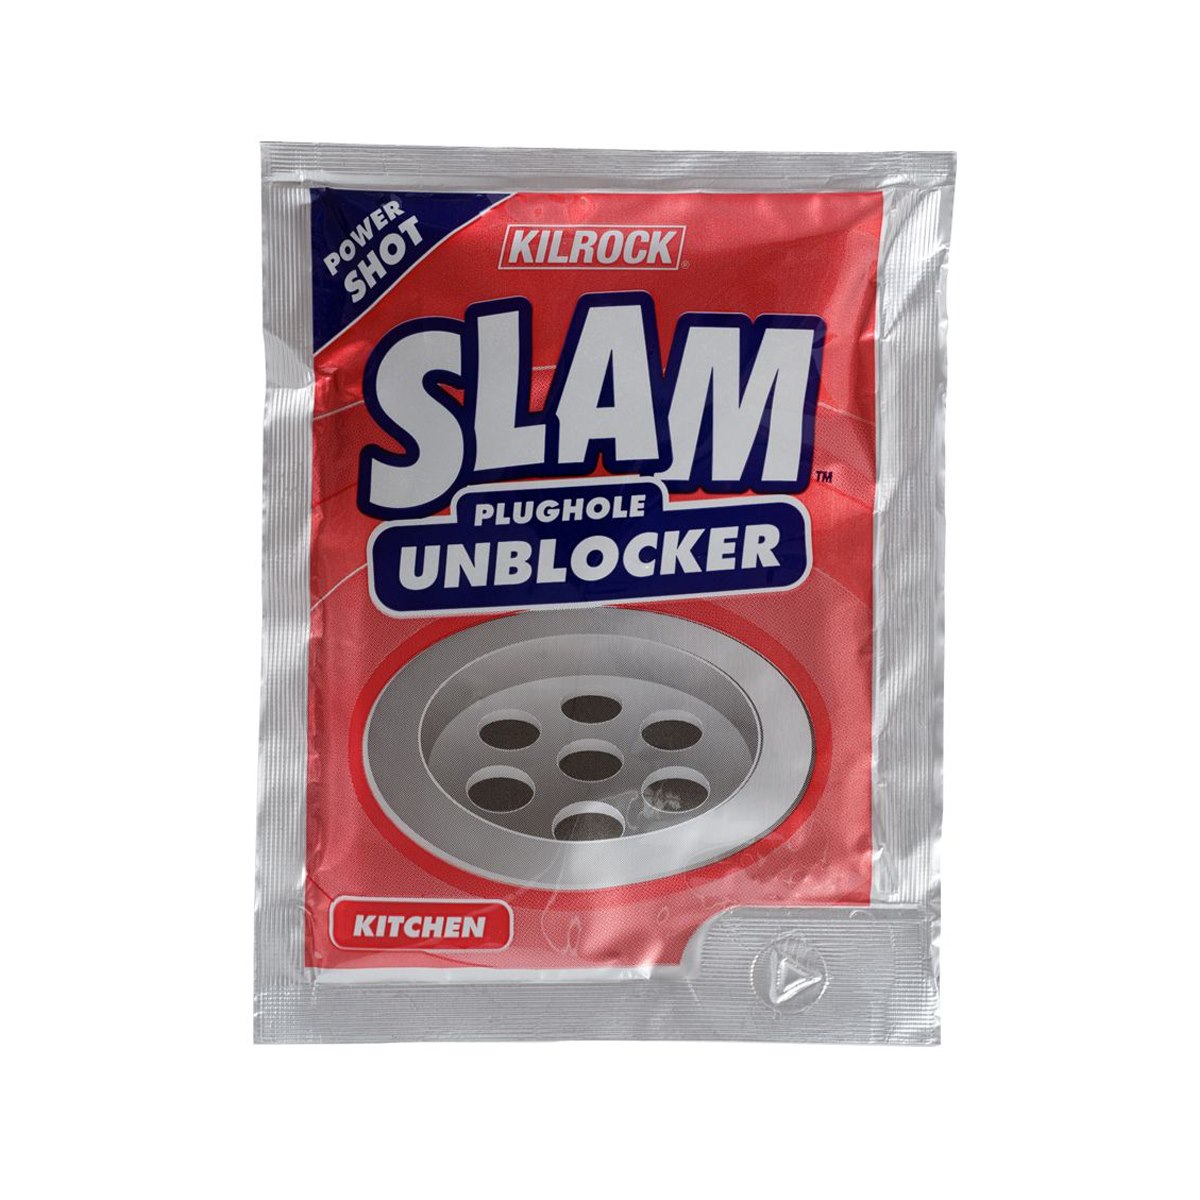 Kilrock Slam Plughole Unblocker Kitchen 60g